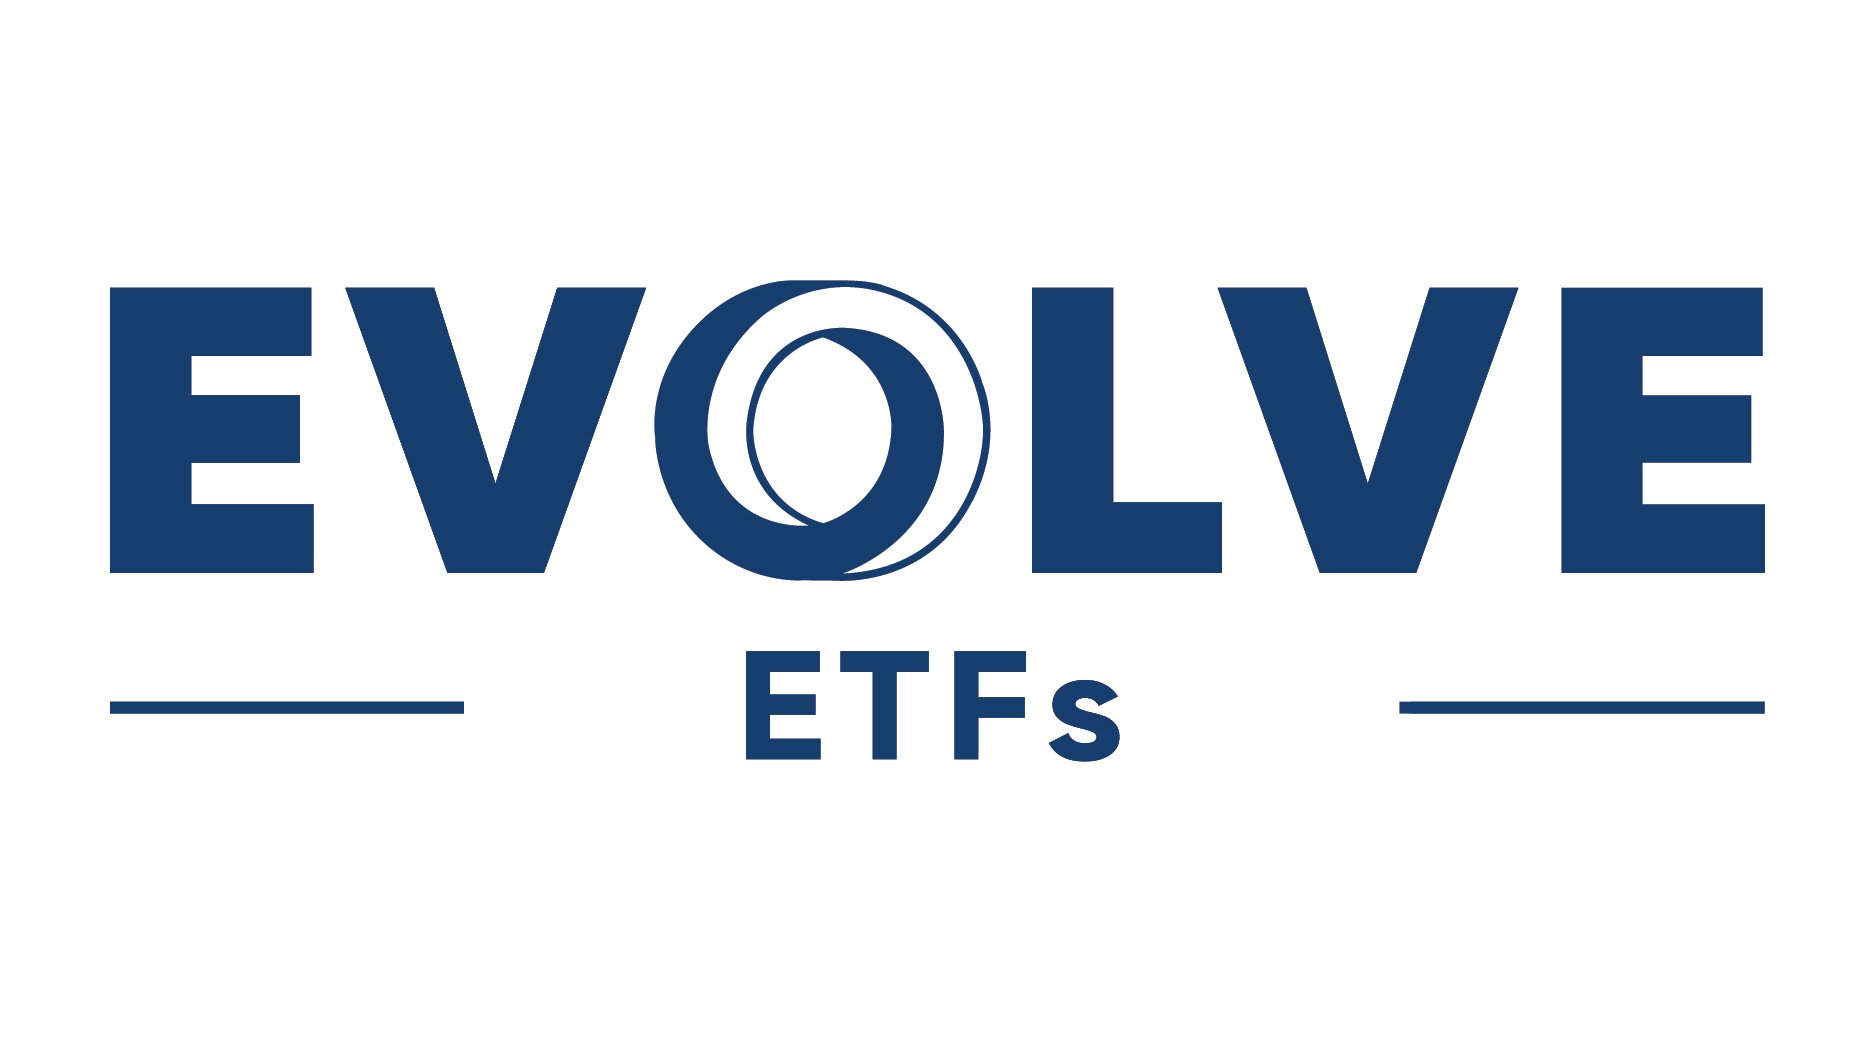 Evolve ETFs logo